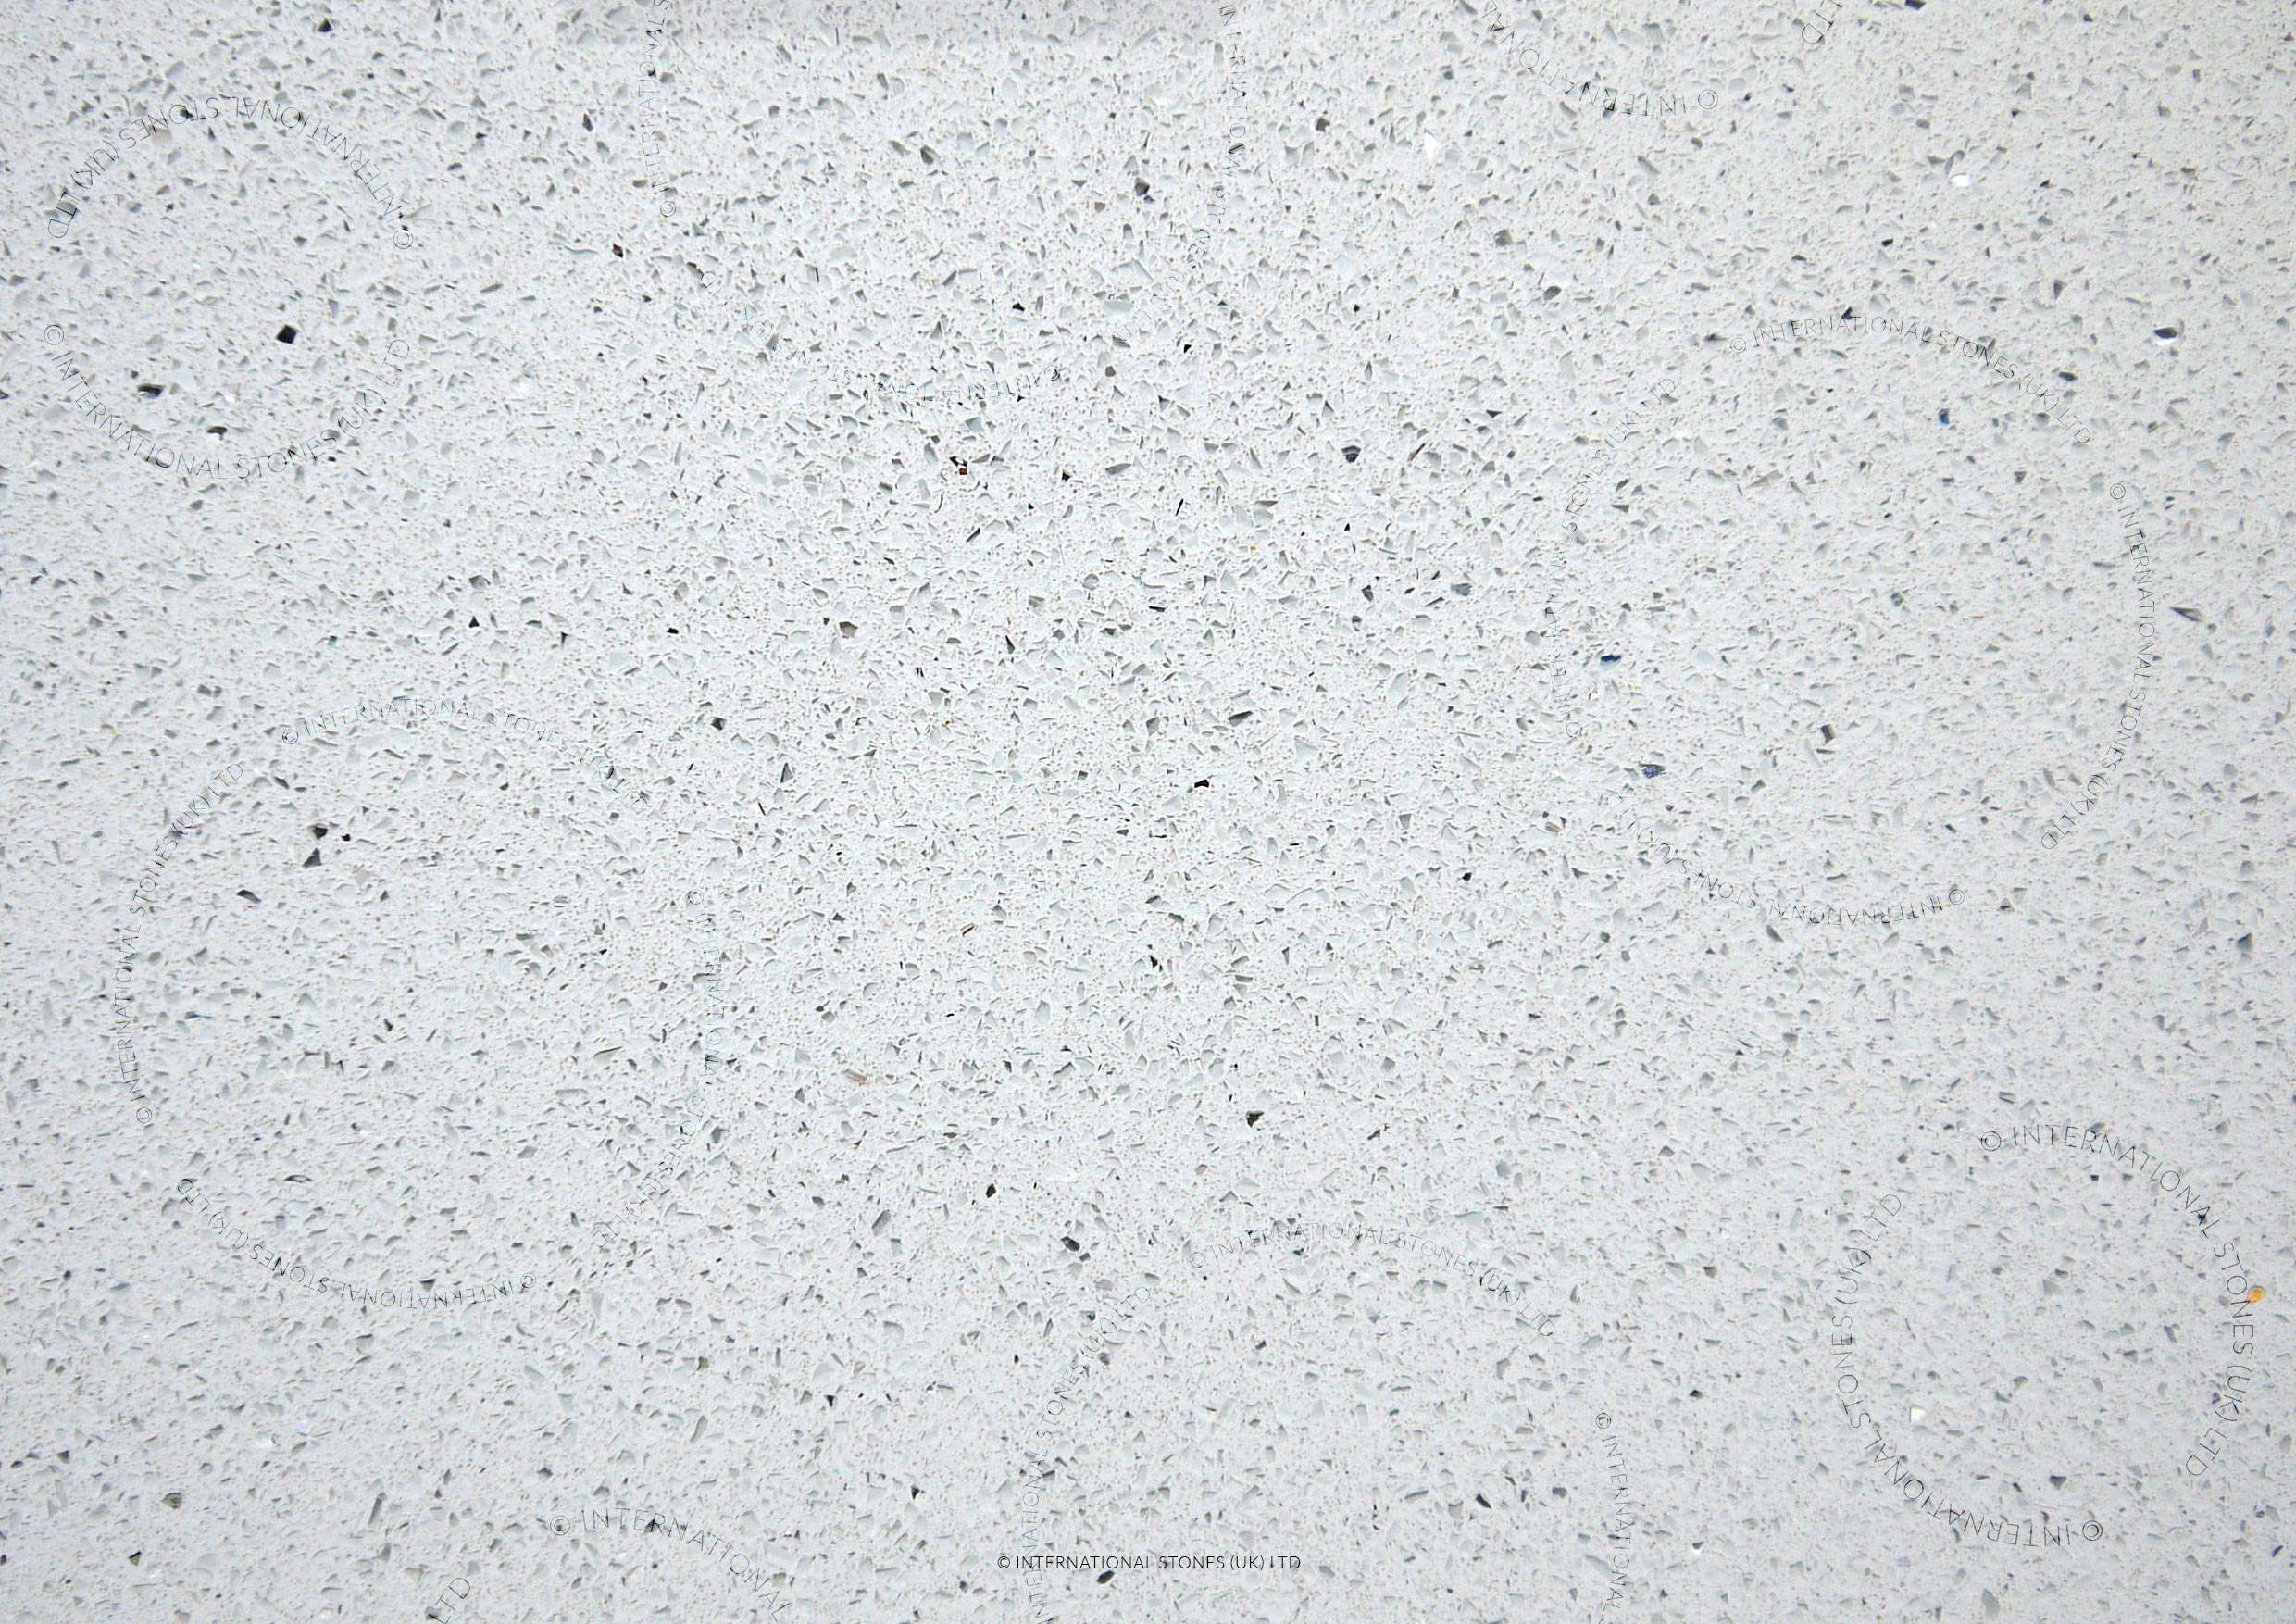 International Stone IQ Blanco Stellar - dorset - Lyme-Regis